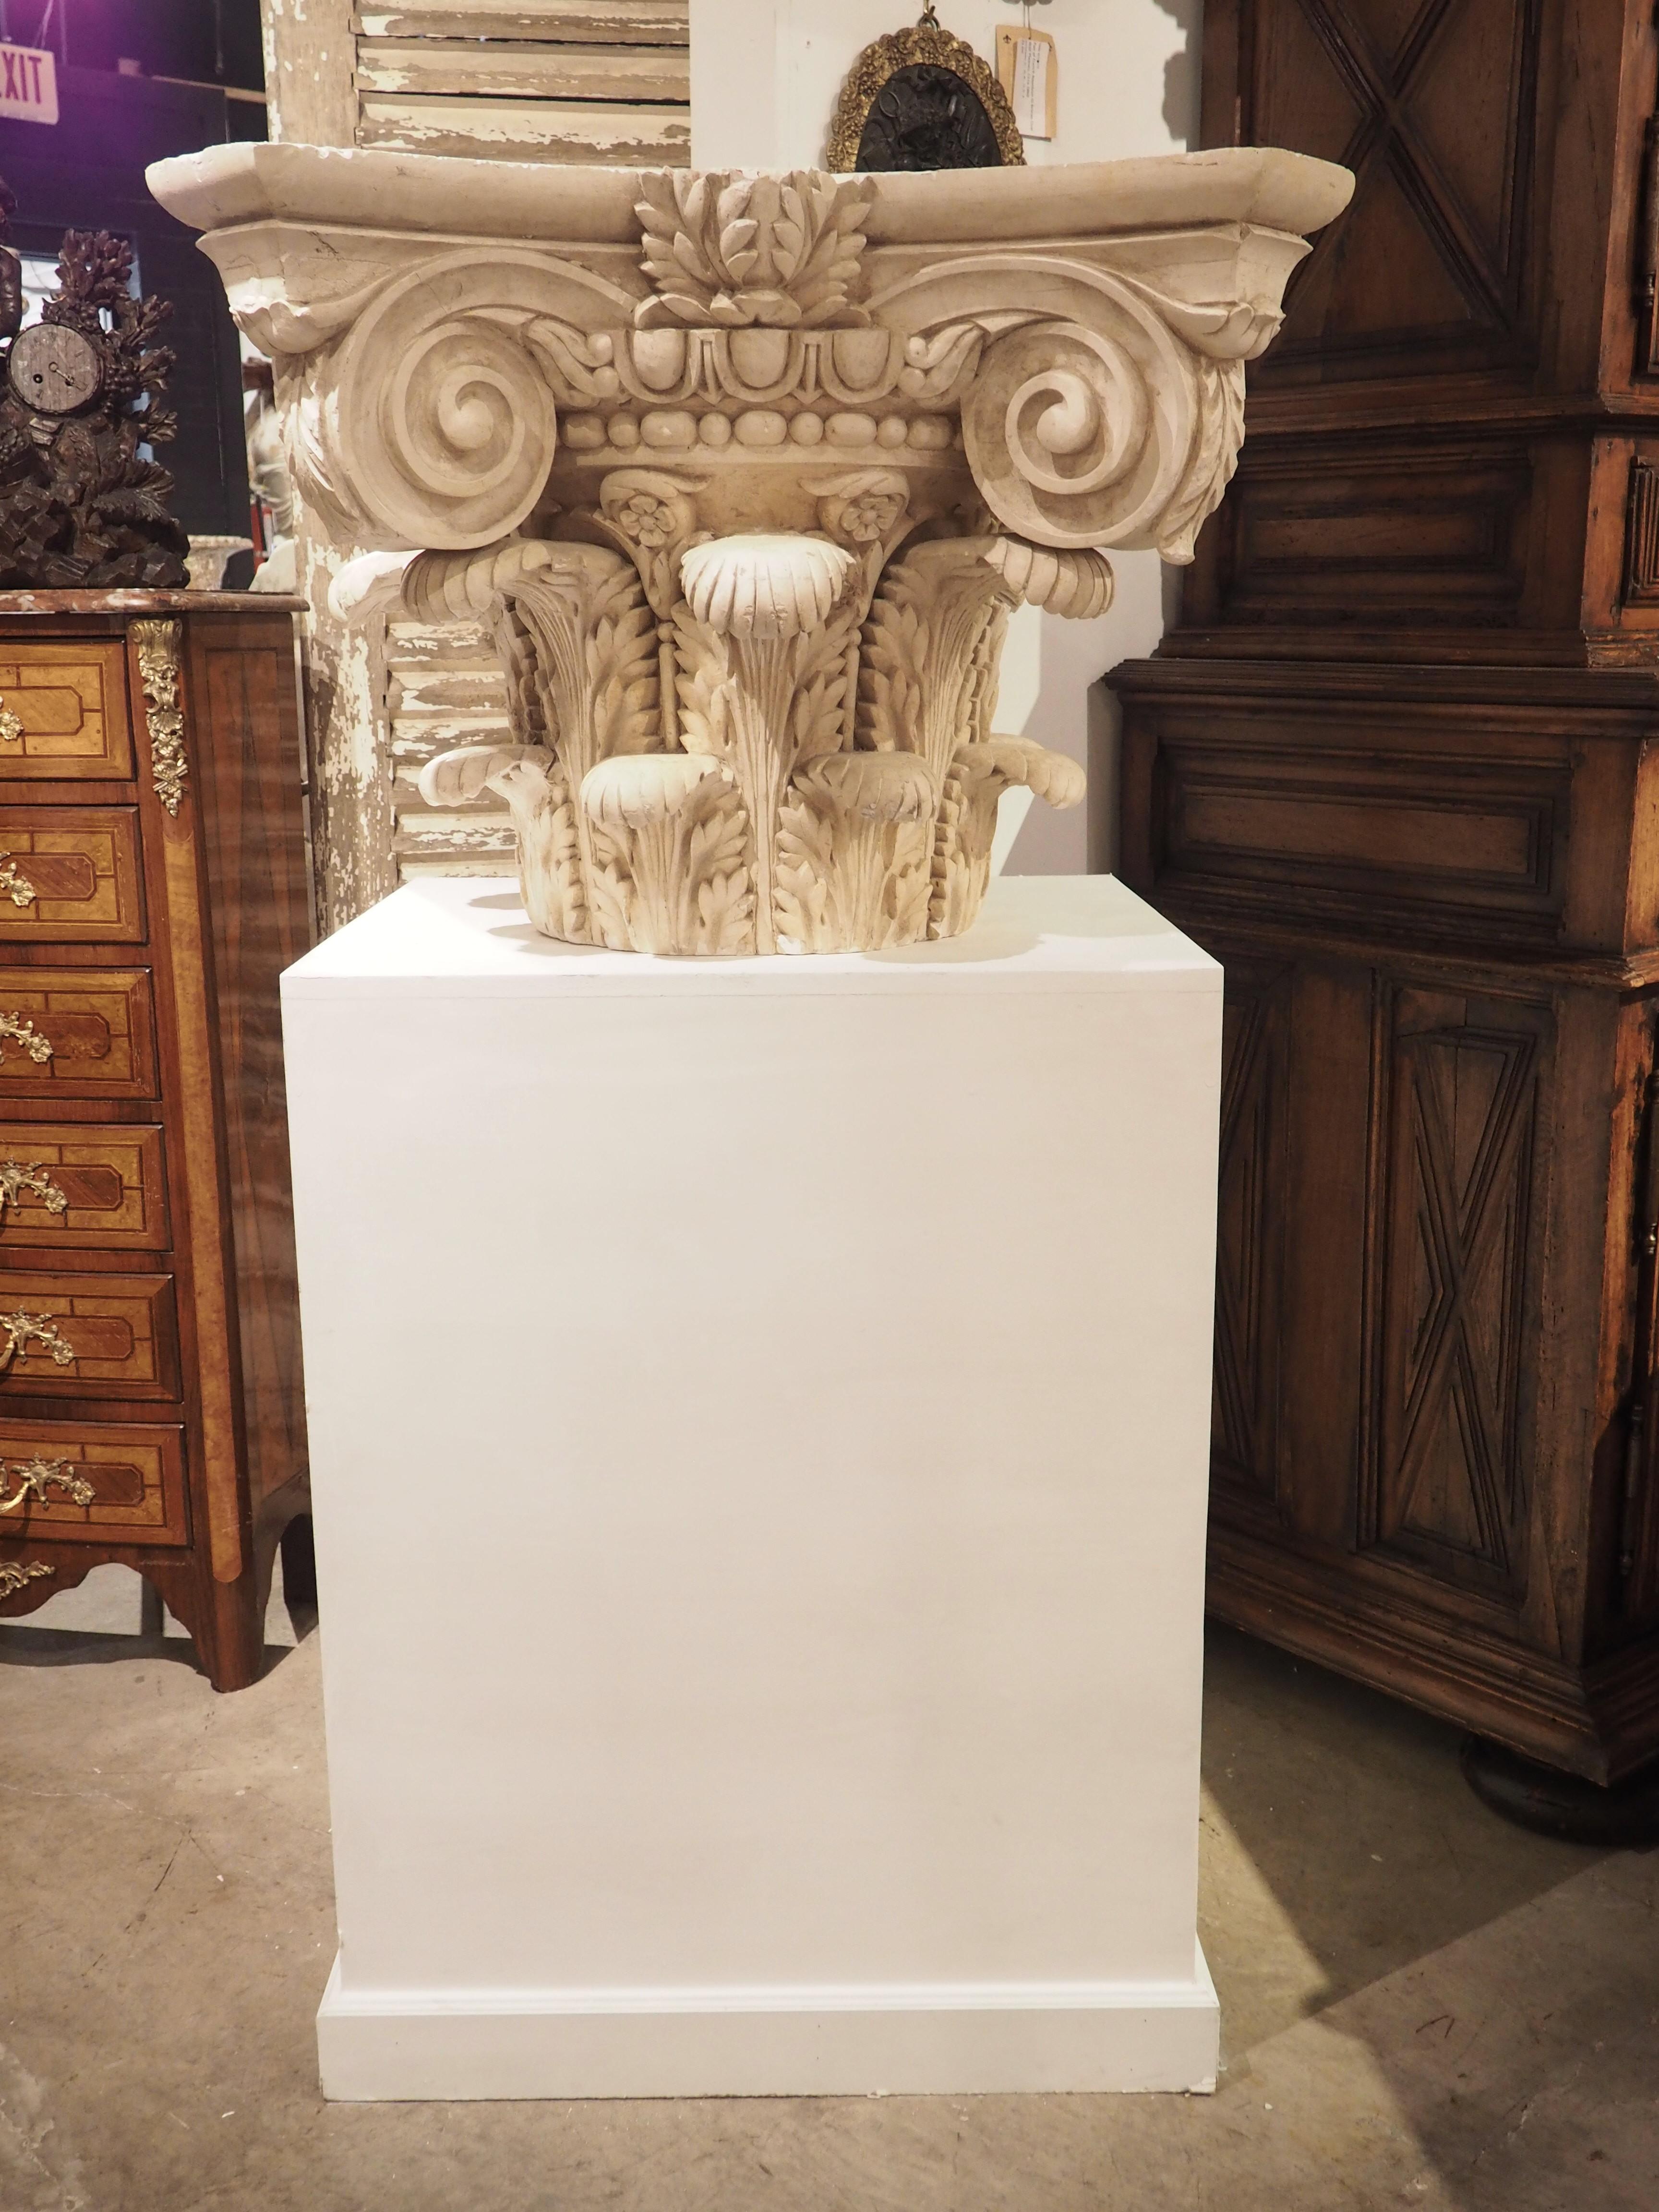 Large Plaster Composite Order Capital on Wooden Pedestal, France, Early 1900s For Sale 12